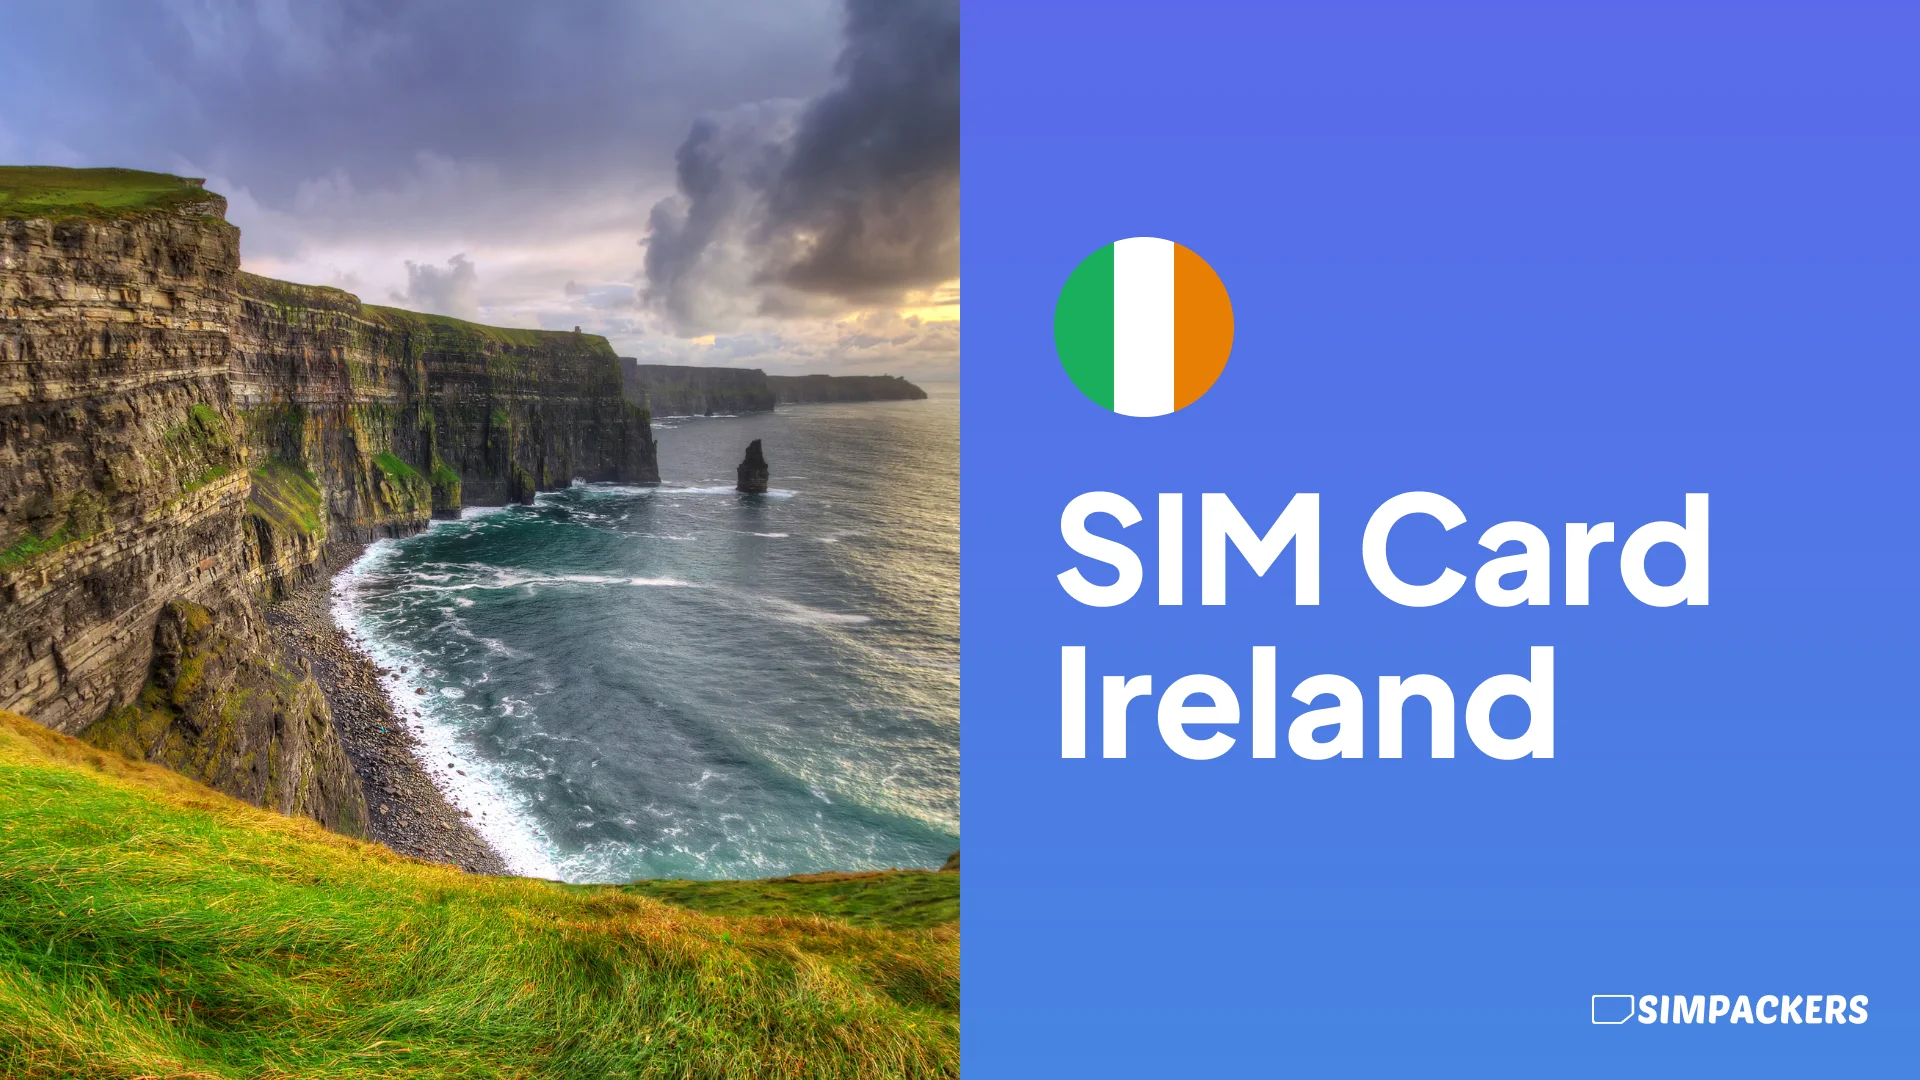 EN/FEATURED_IMAGES/sim-card-ireland.webp